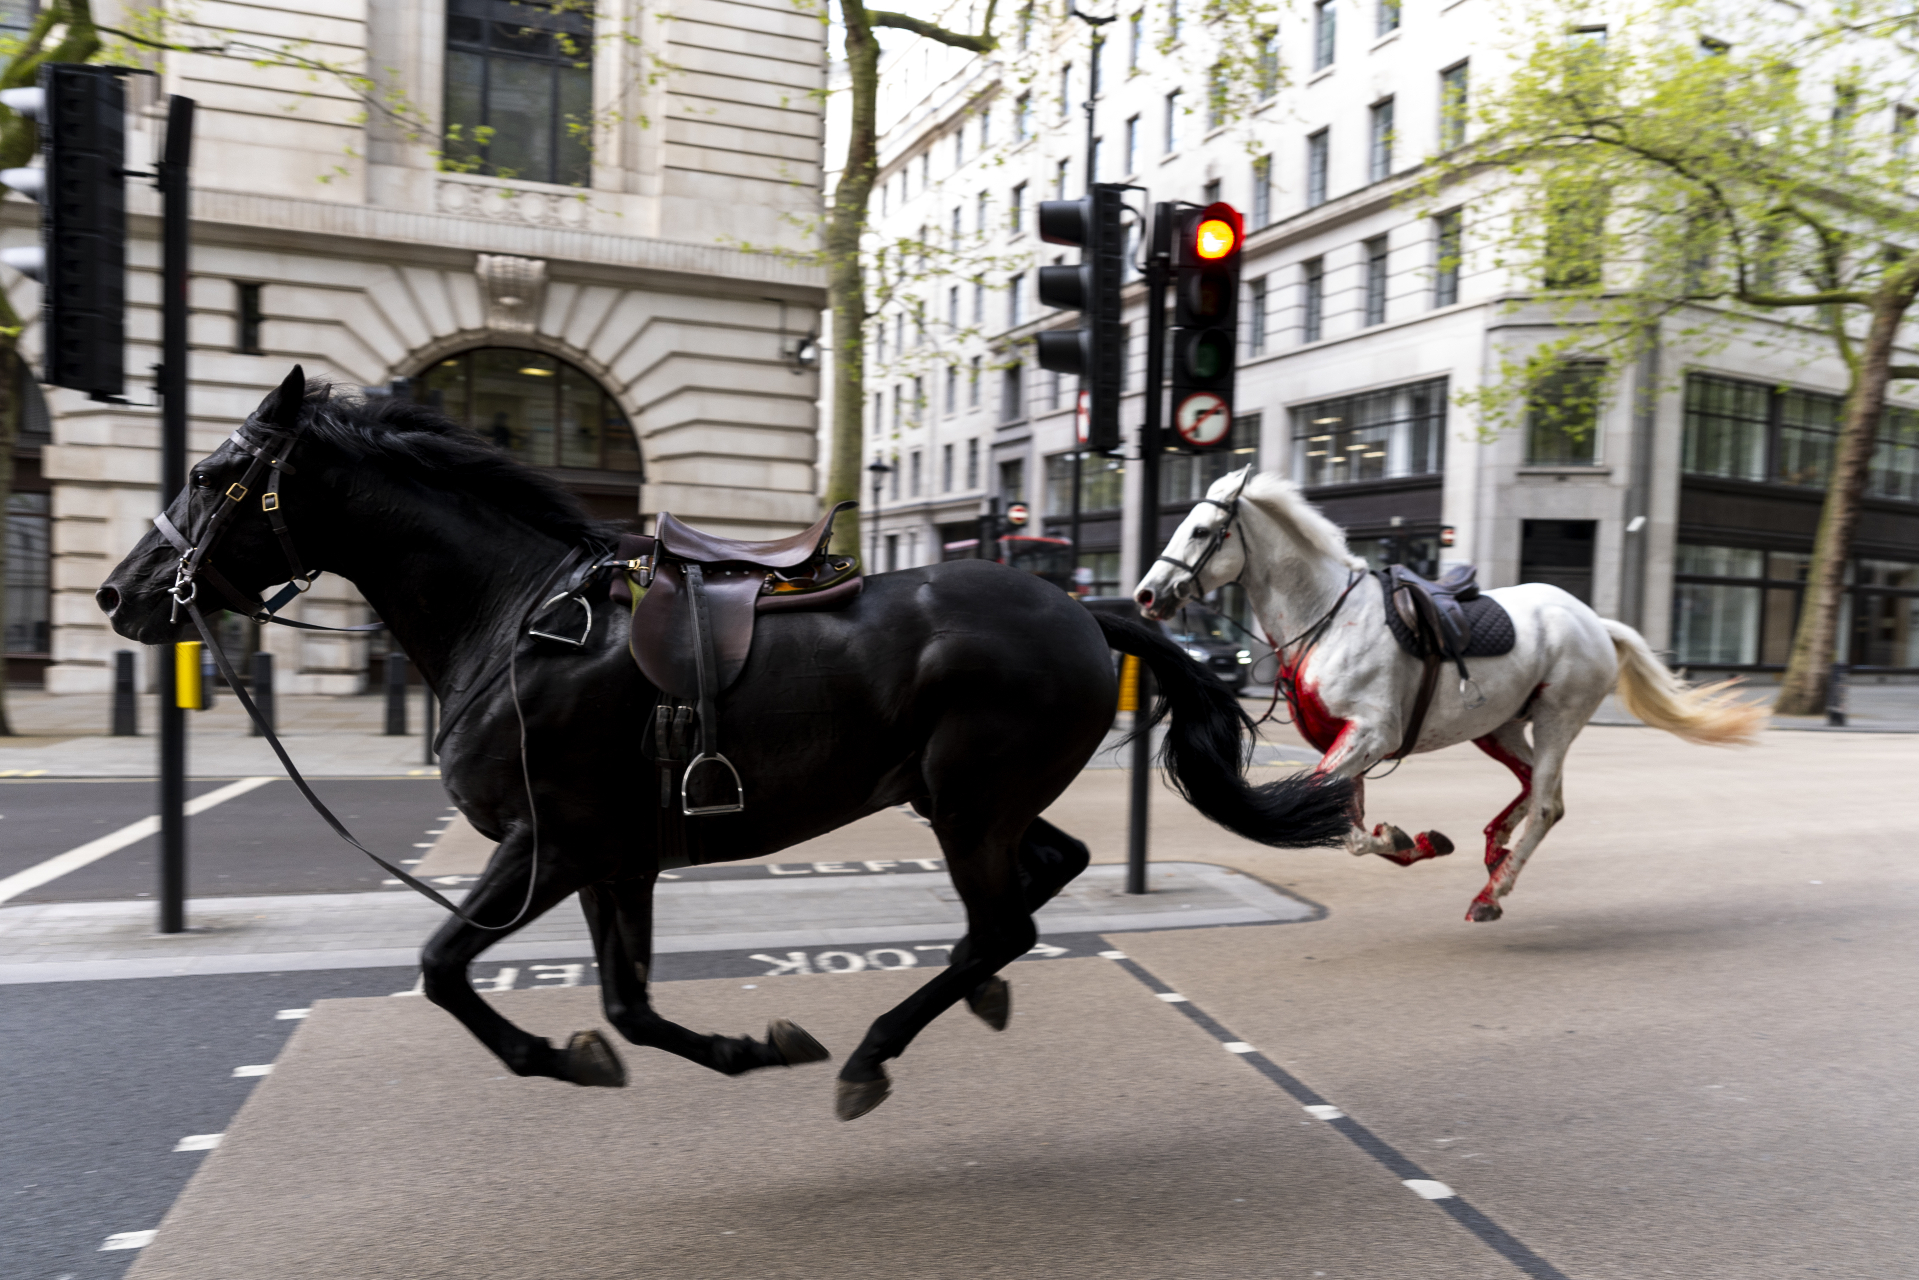 In pictures: Cavalry horses run lose causing havoc in London